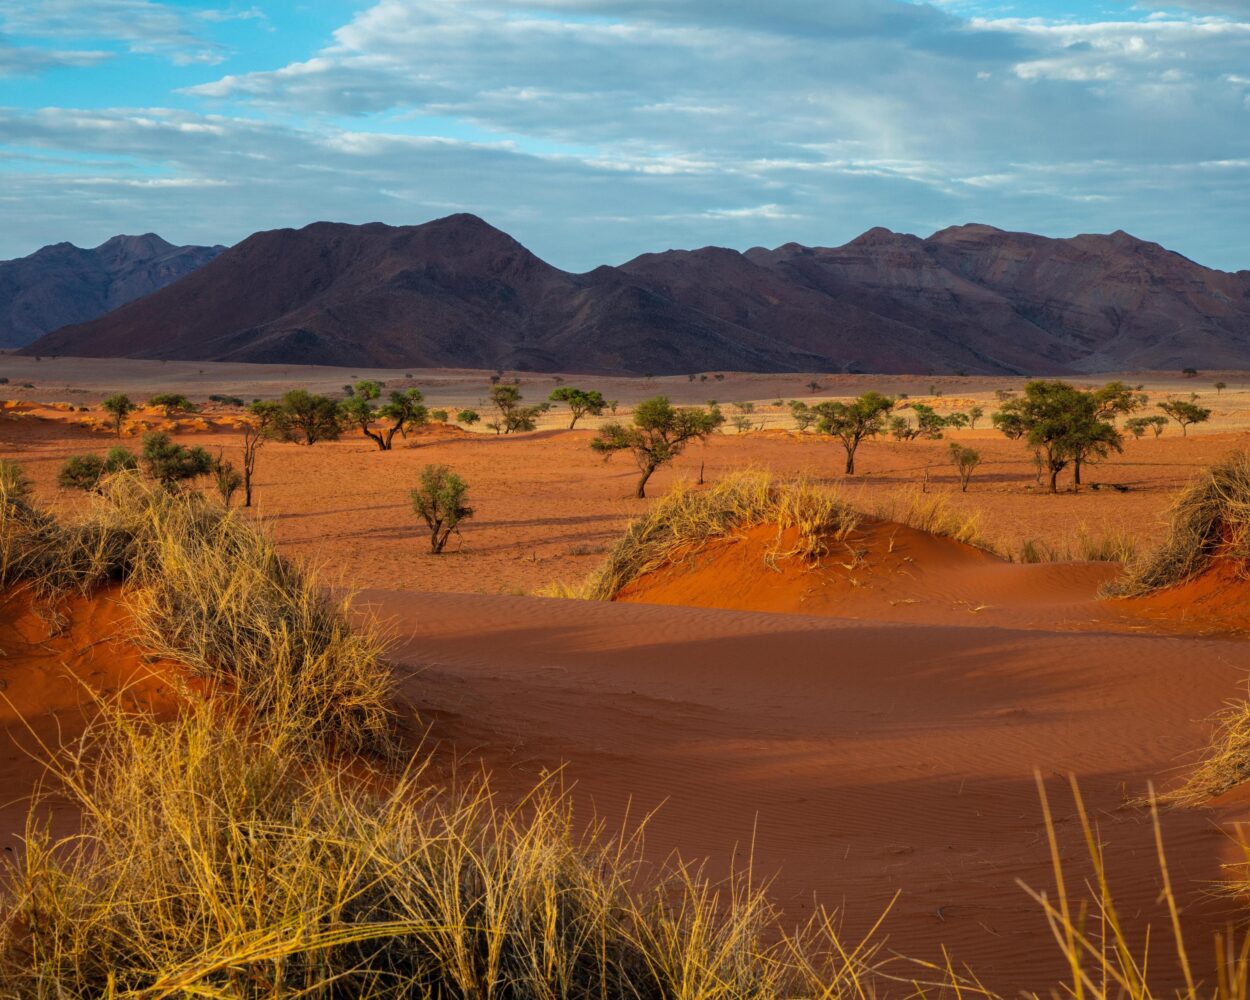 Camping Safari "11 Tage durch Namibia" Hintergrundbild